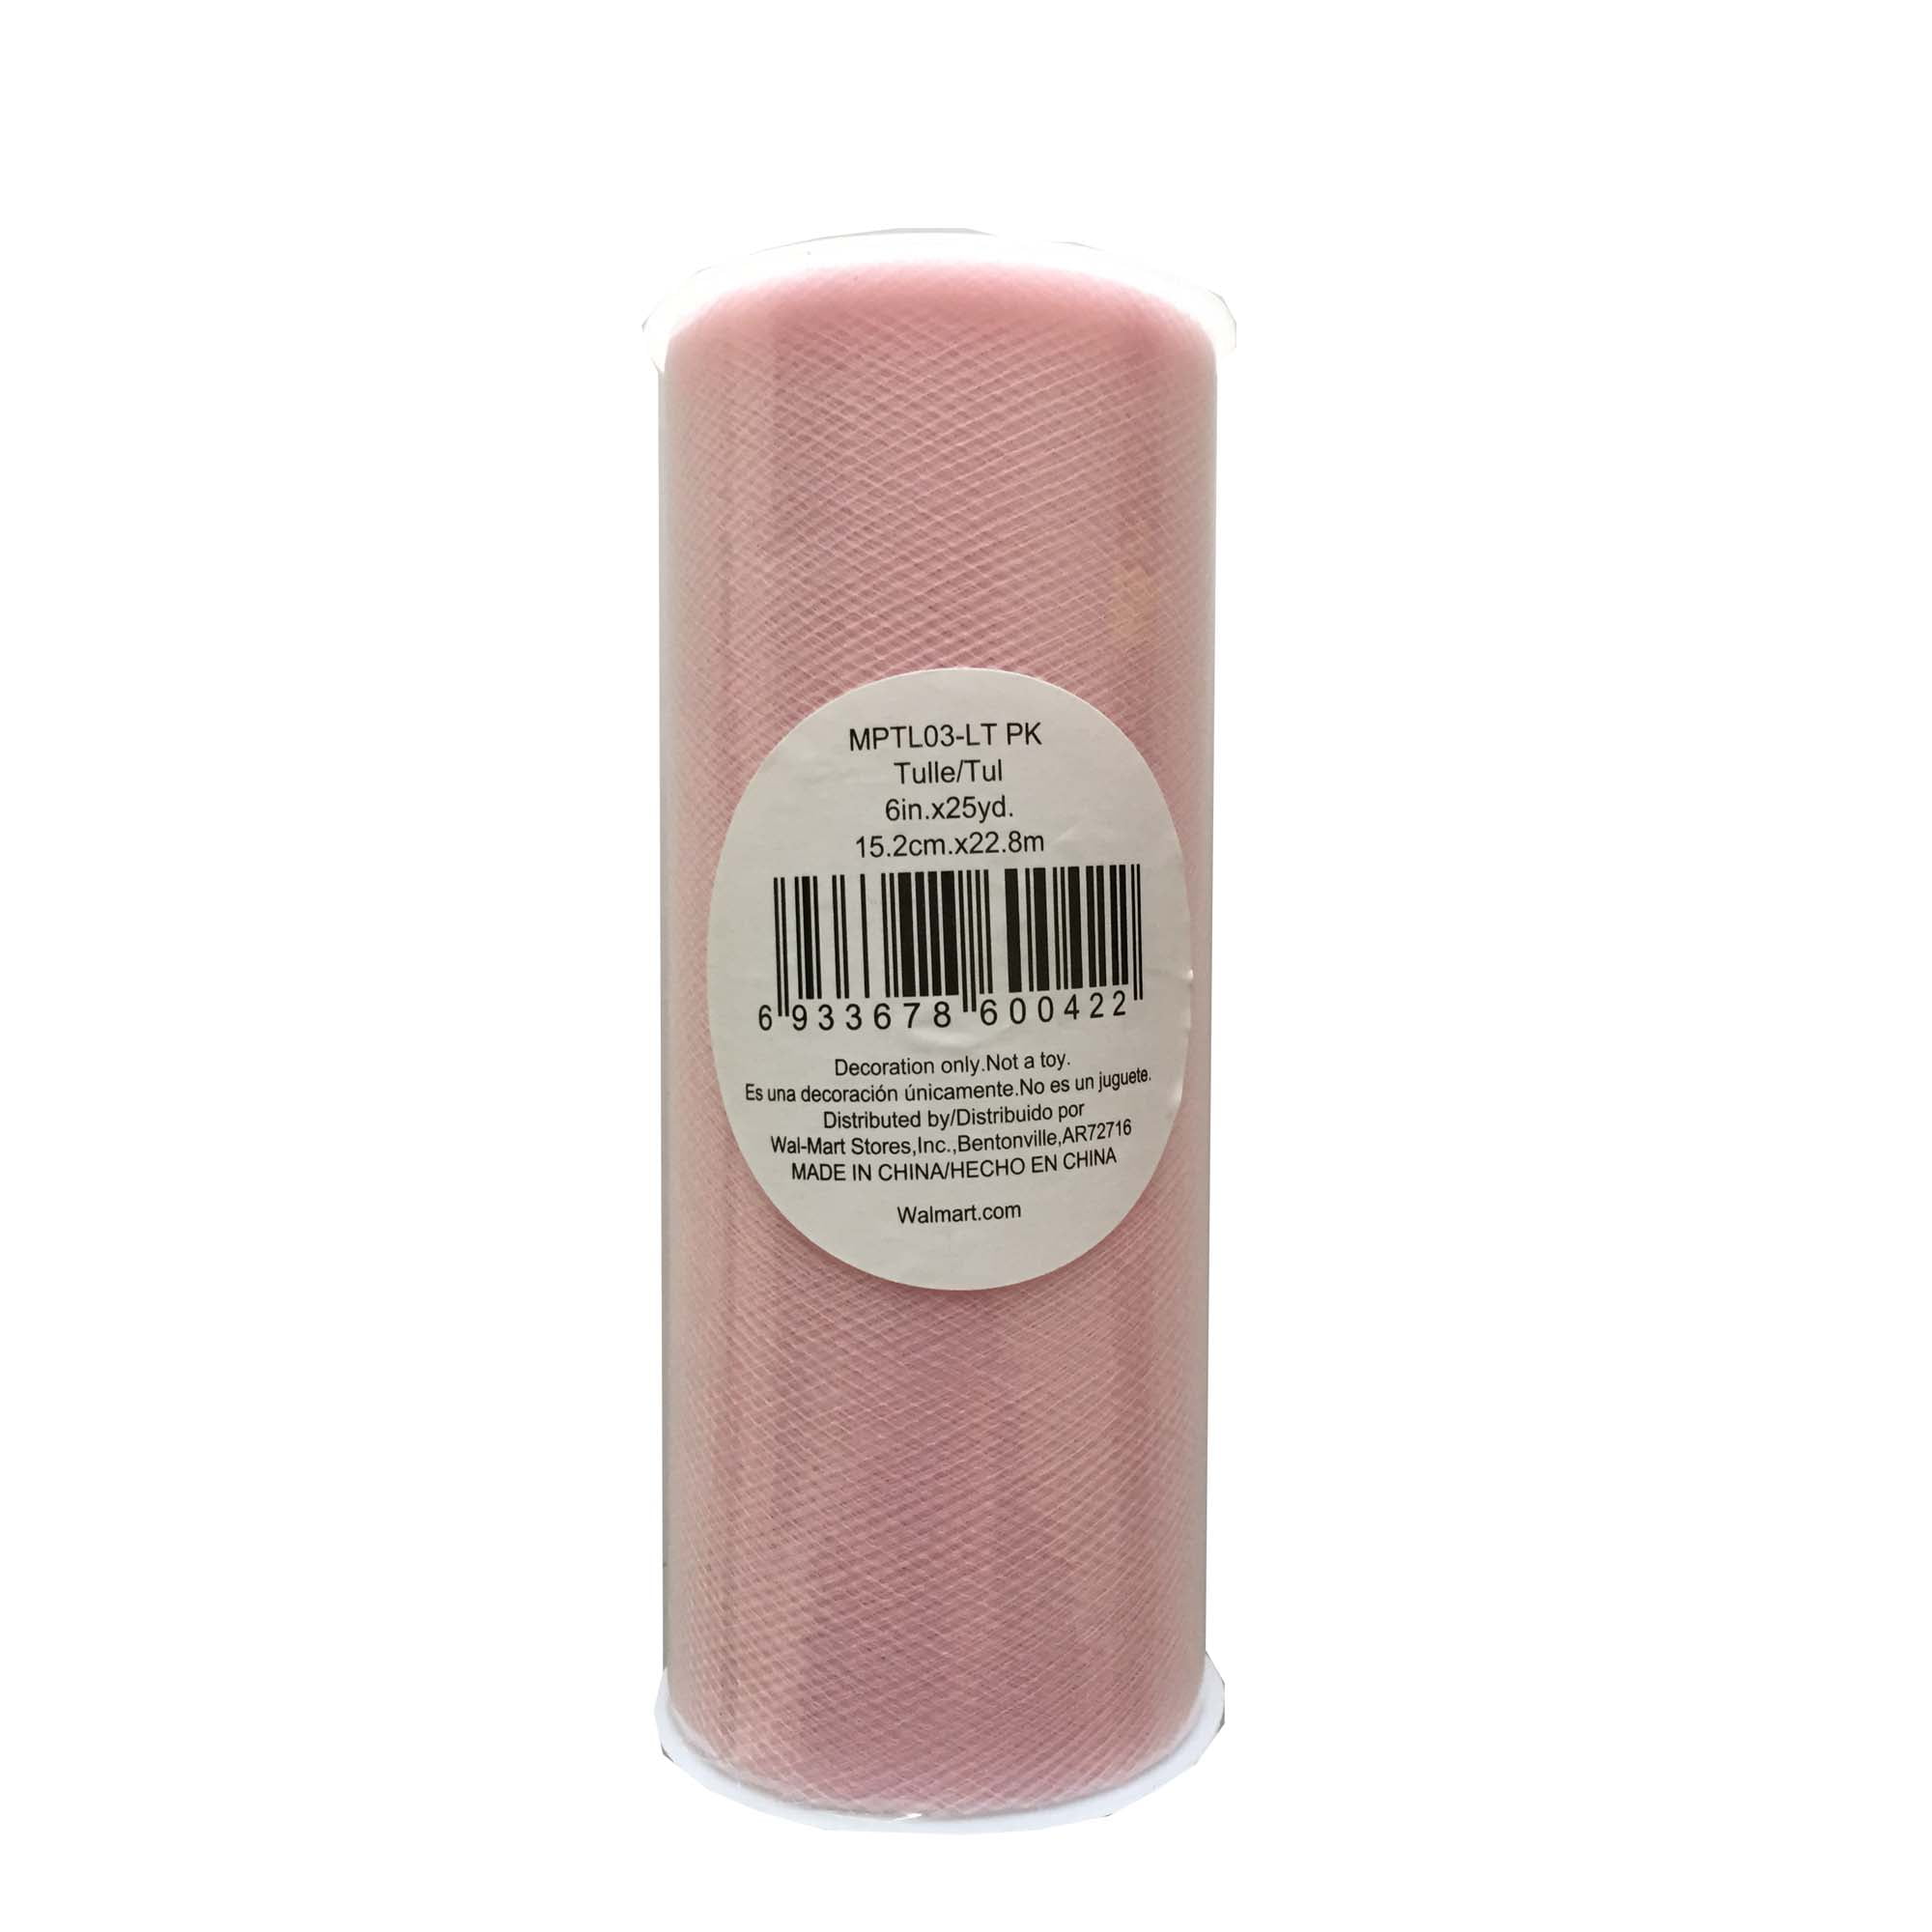 Light Garnet Pink Tulle Fabric – Tulle Source